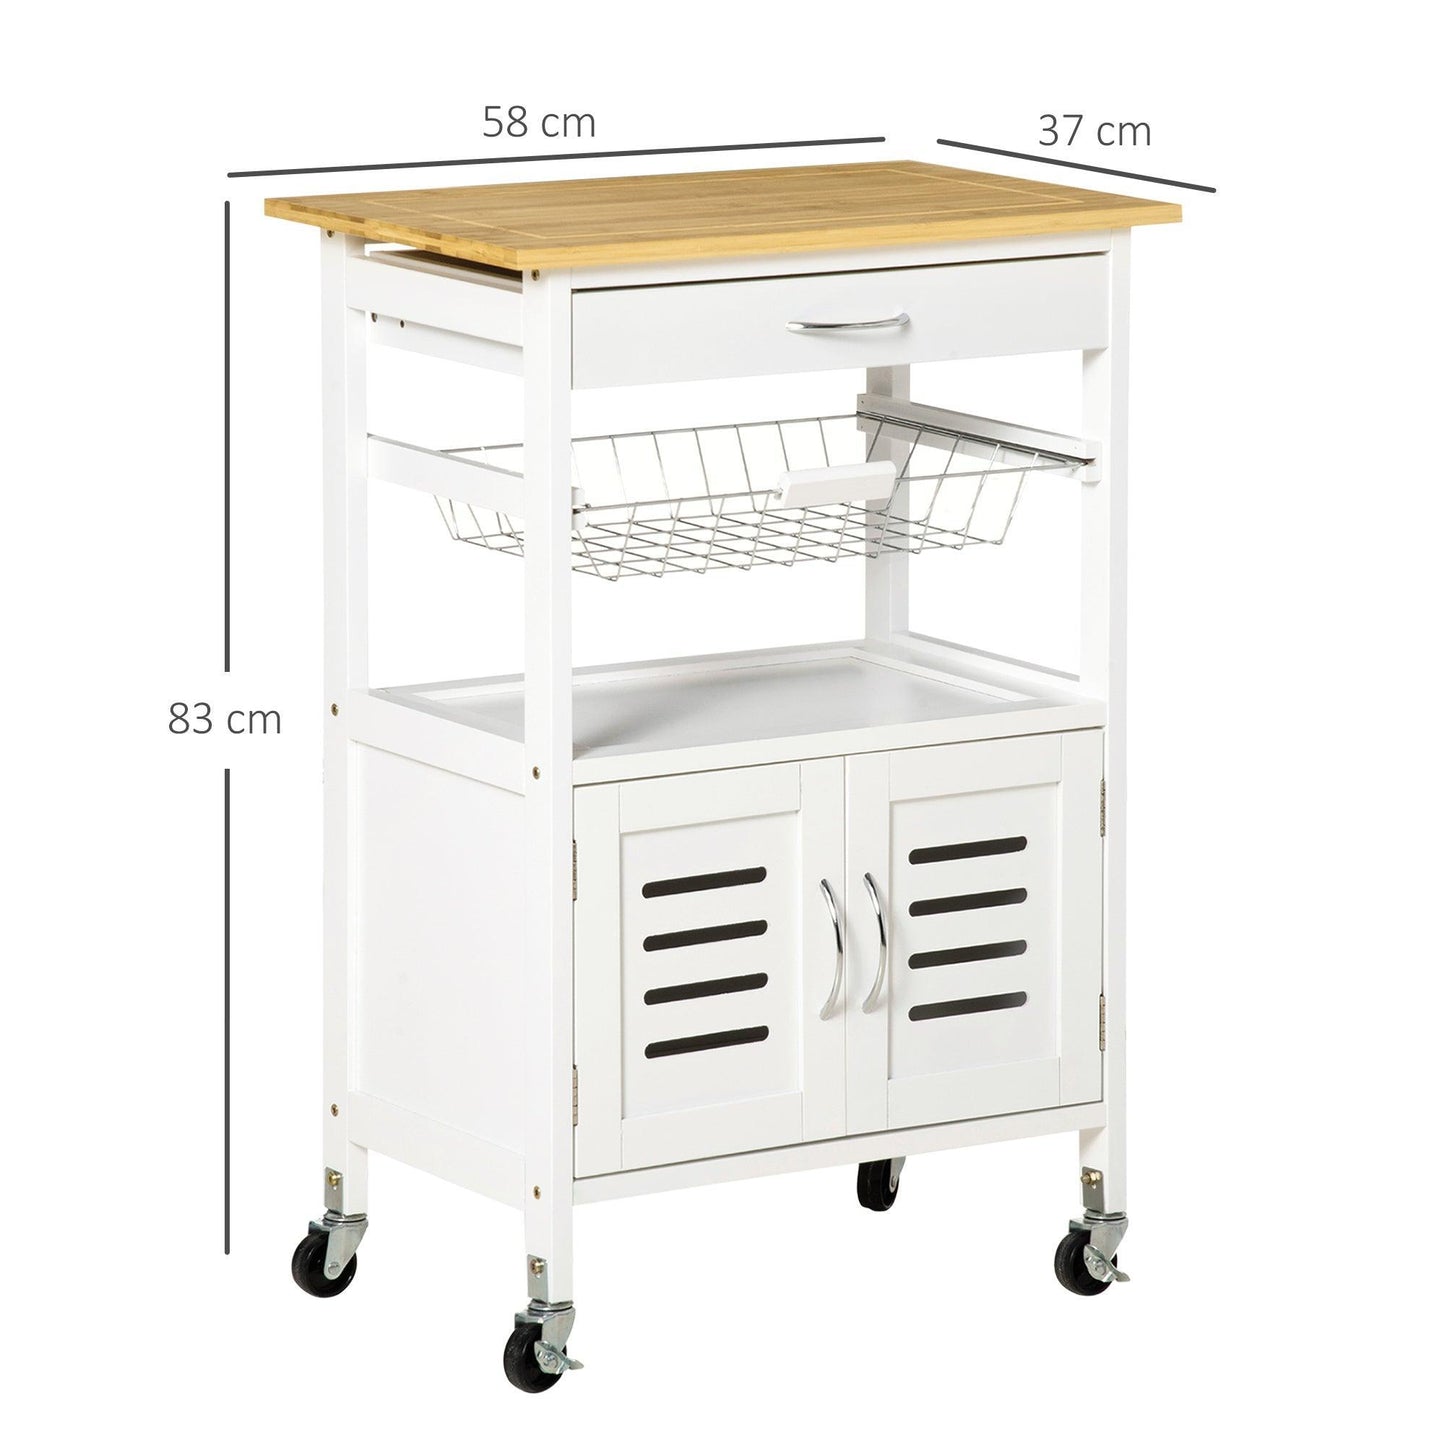 HOMCOM Kitchen Island Cart with Storage and Rolling Wheels - White - ALL4U RETAILER LTD